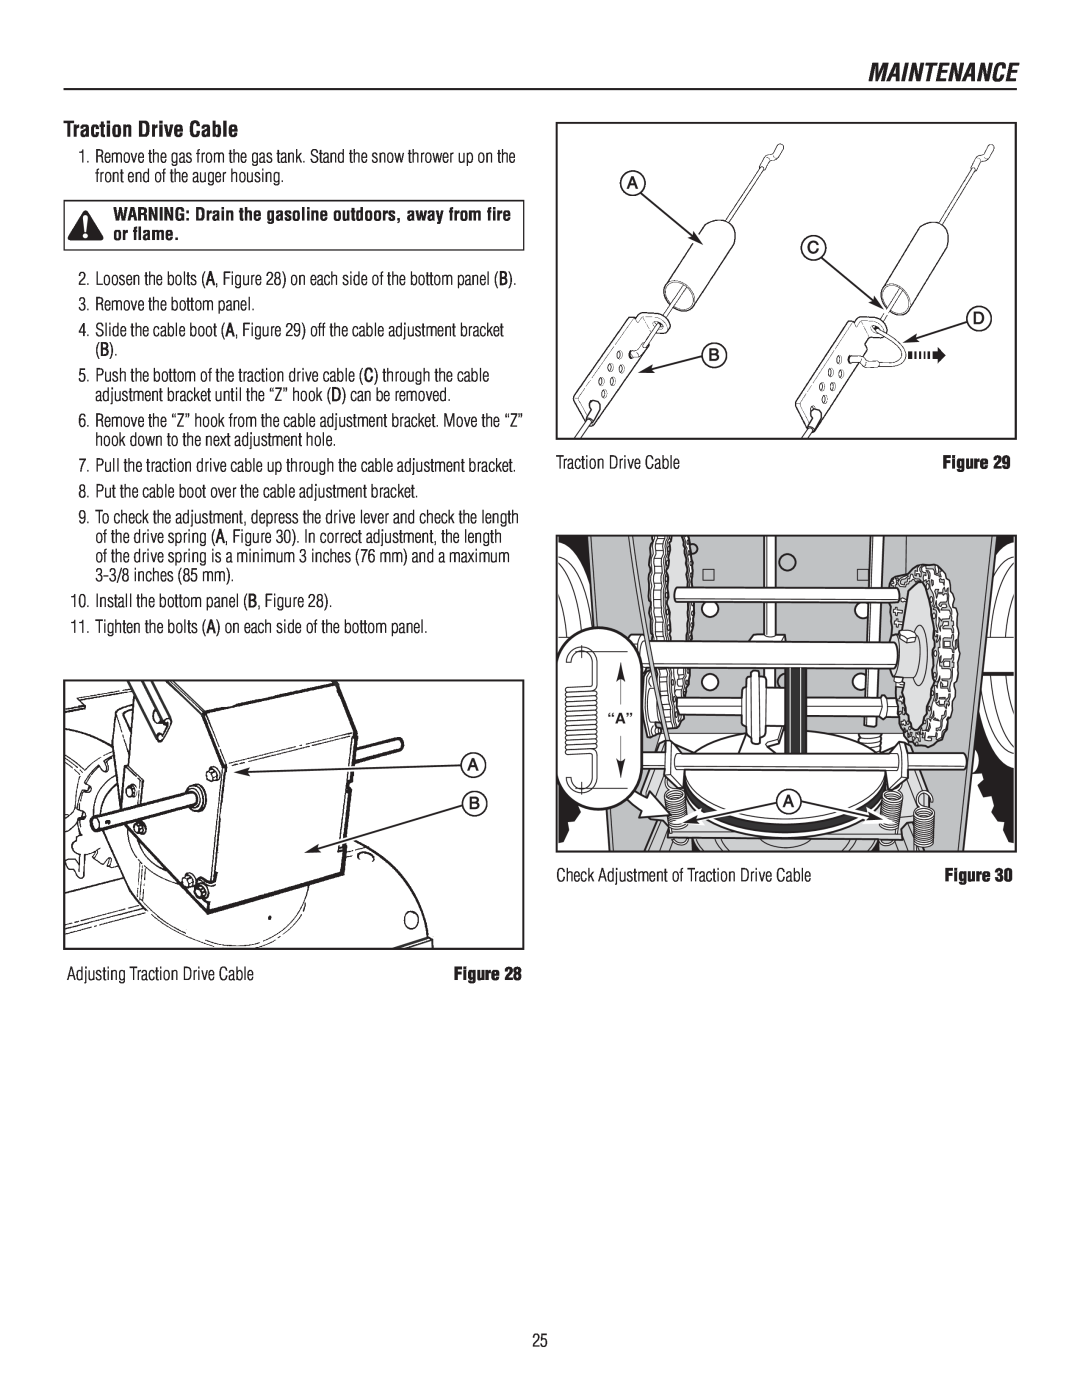 Murray 1737920, 1695722 manual Maintenance, Check Adjustment of Traction Drive Cable, Adjusting Traction Drive Cable 